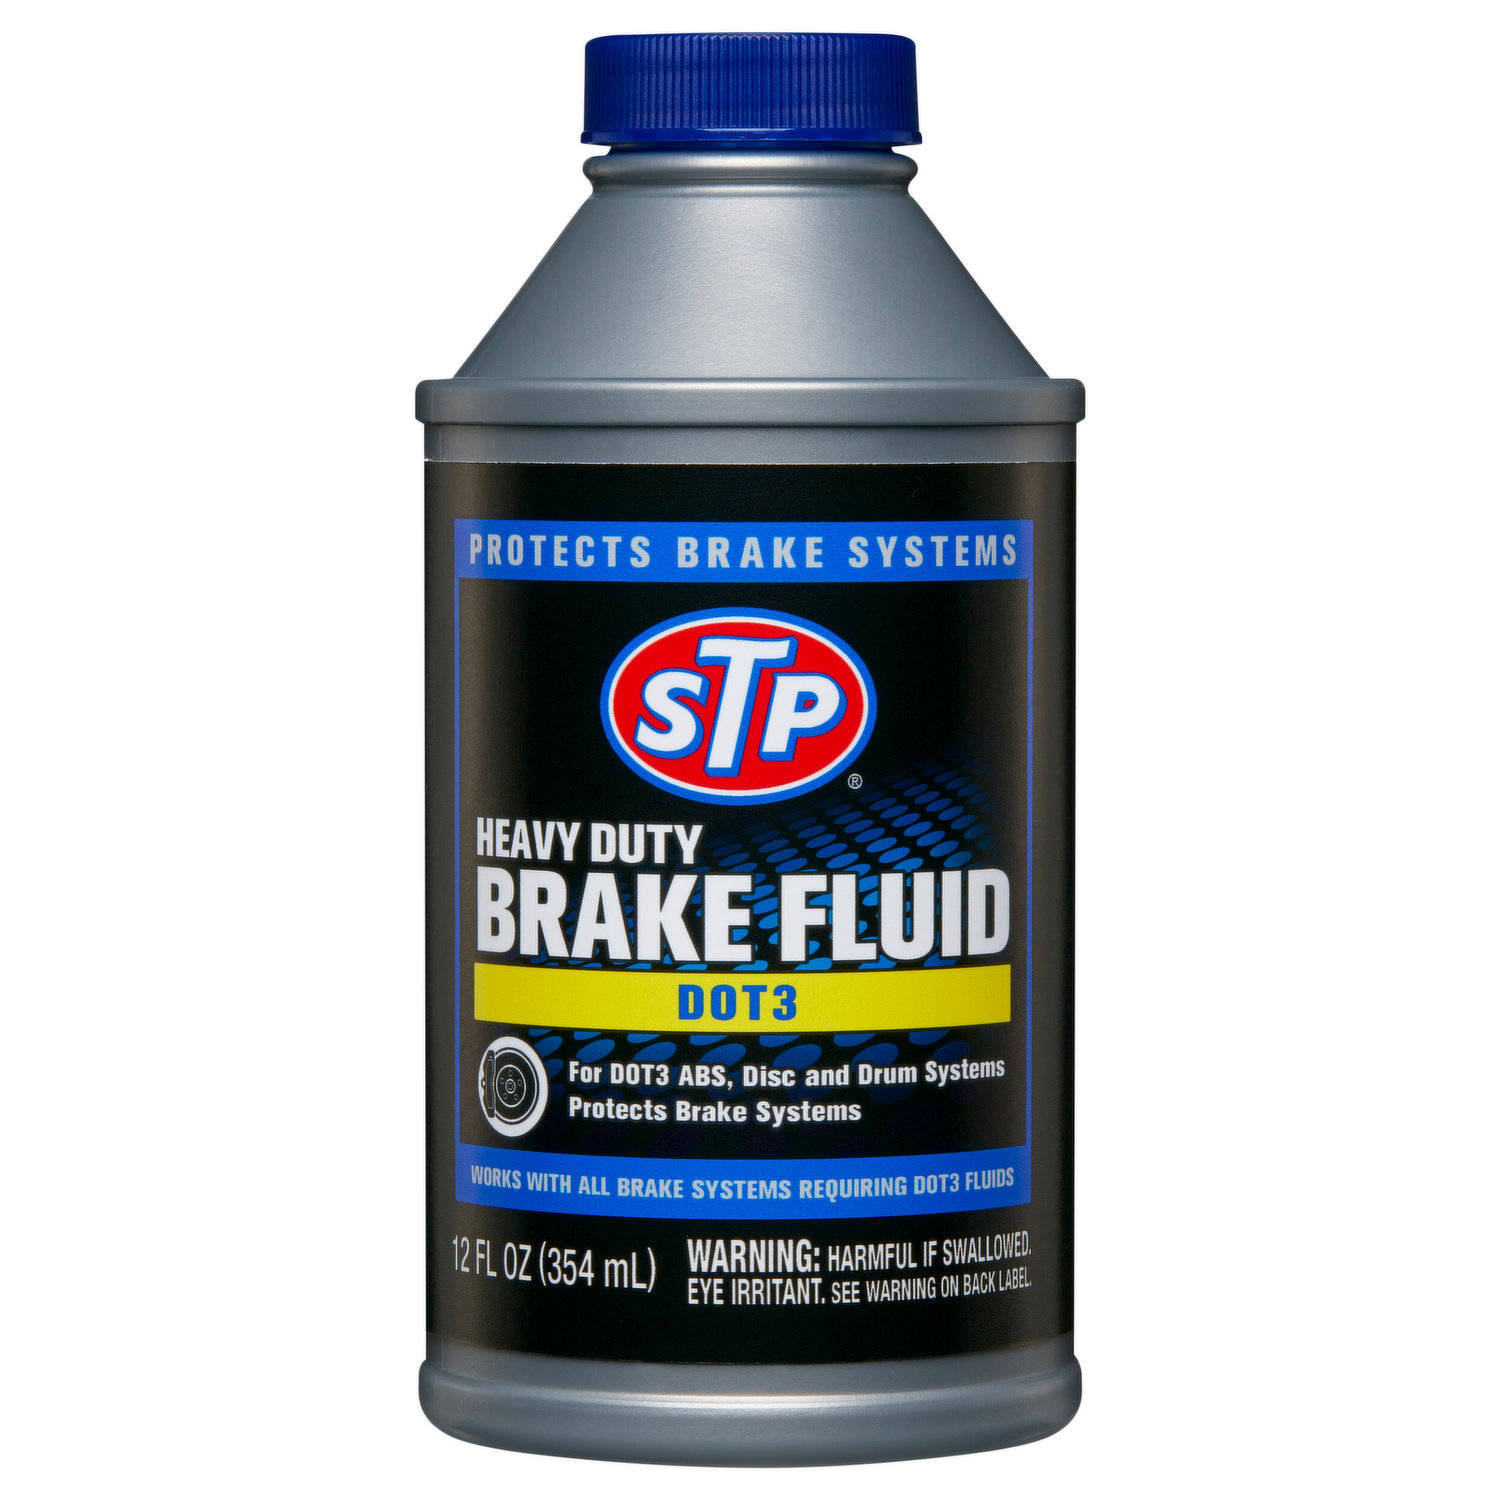 American Car Craft Premium Tire Shine Spray | 16 fl oz Spray Bottle